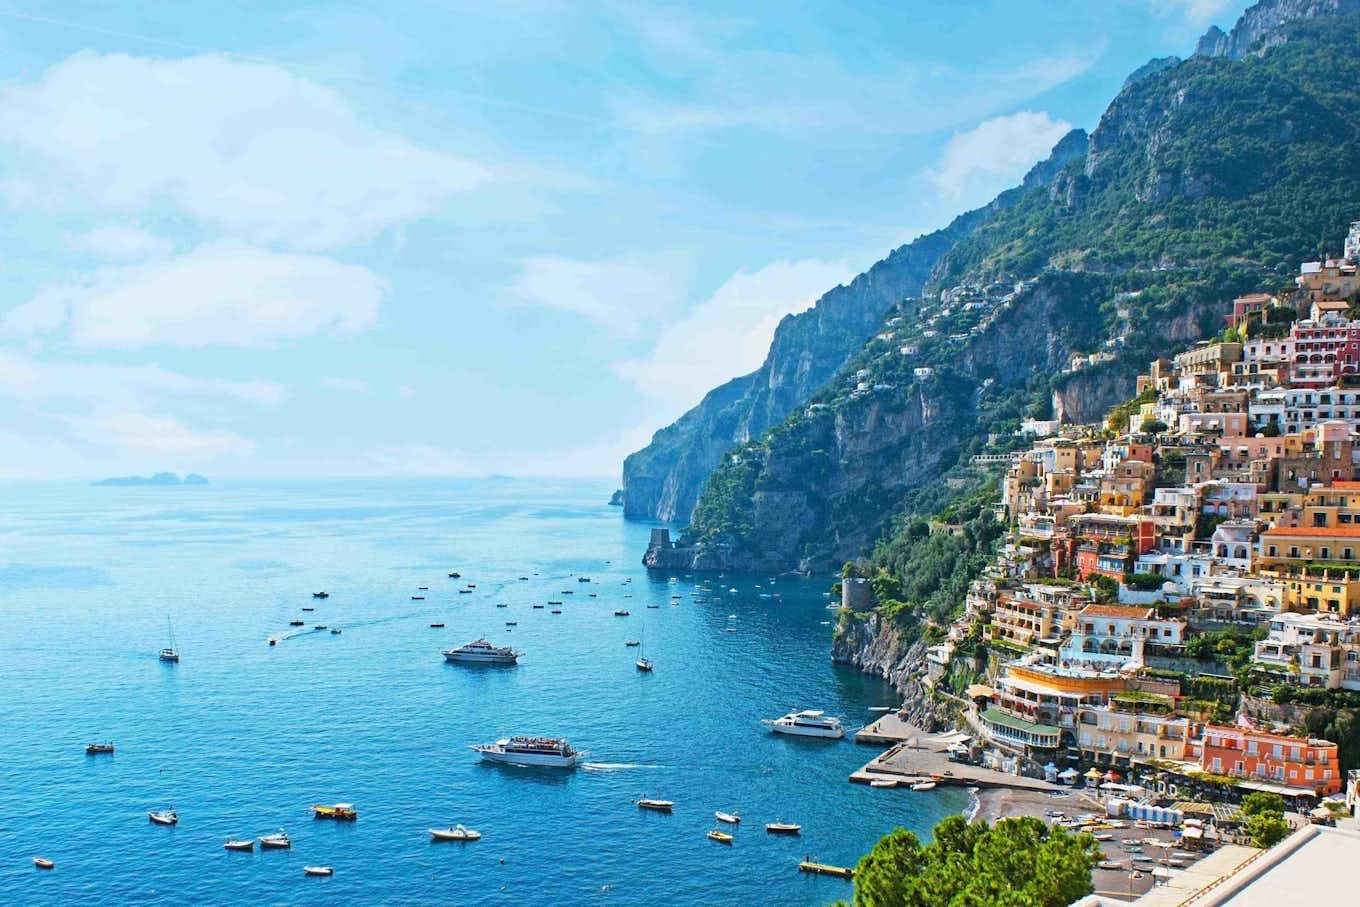 Buildings on the Amalfi Coast, Italy